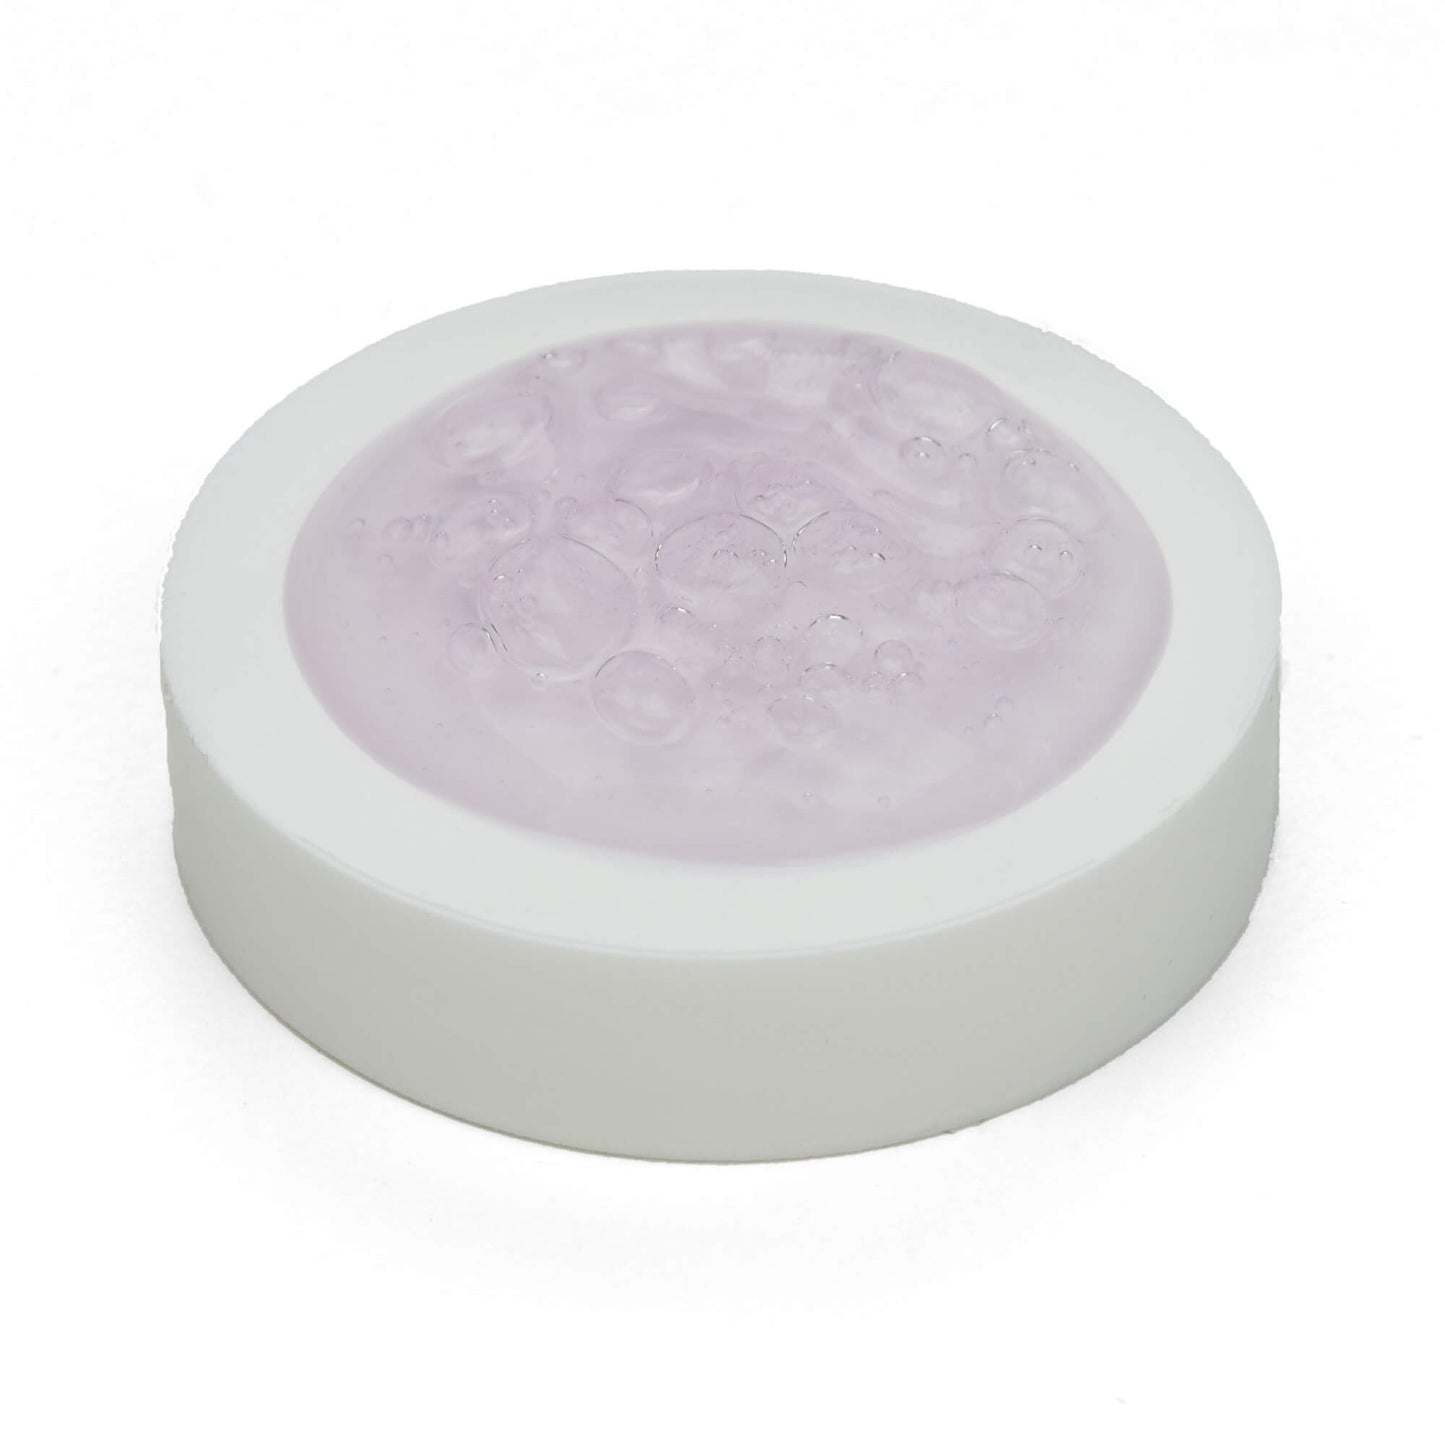 'French Lavender' Liquid Soap